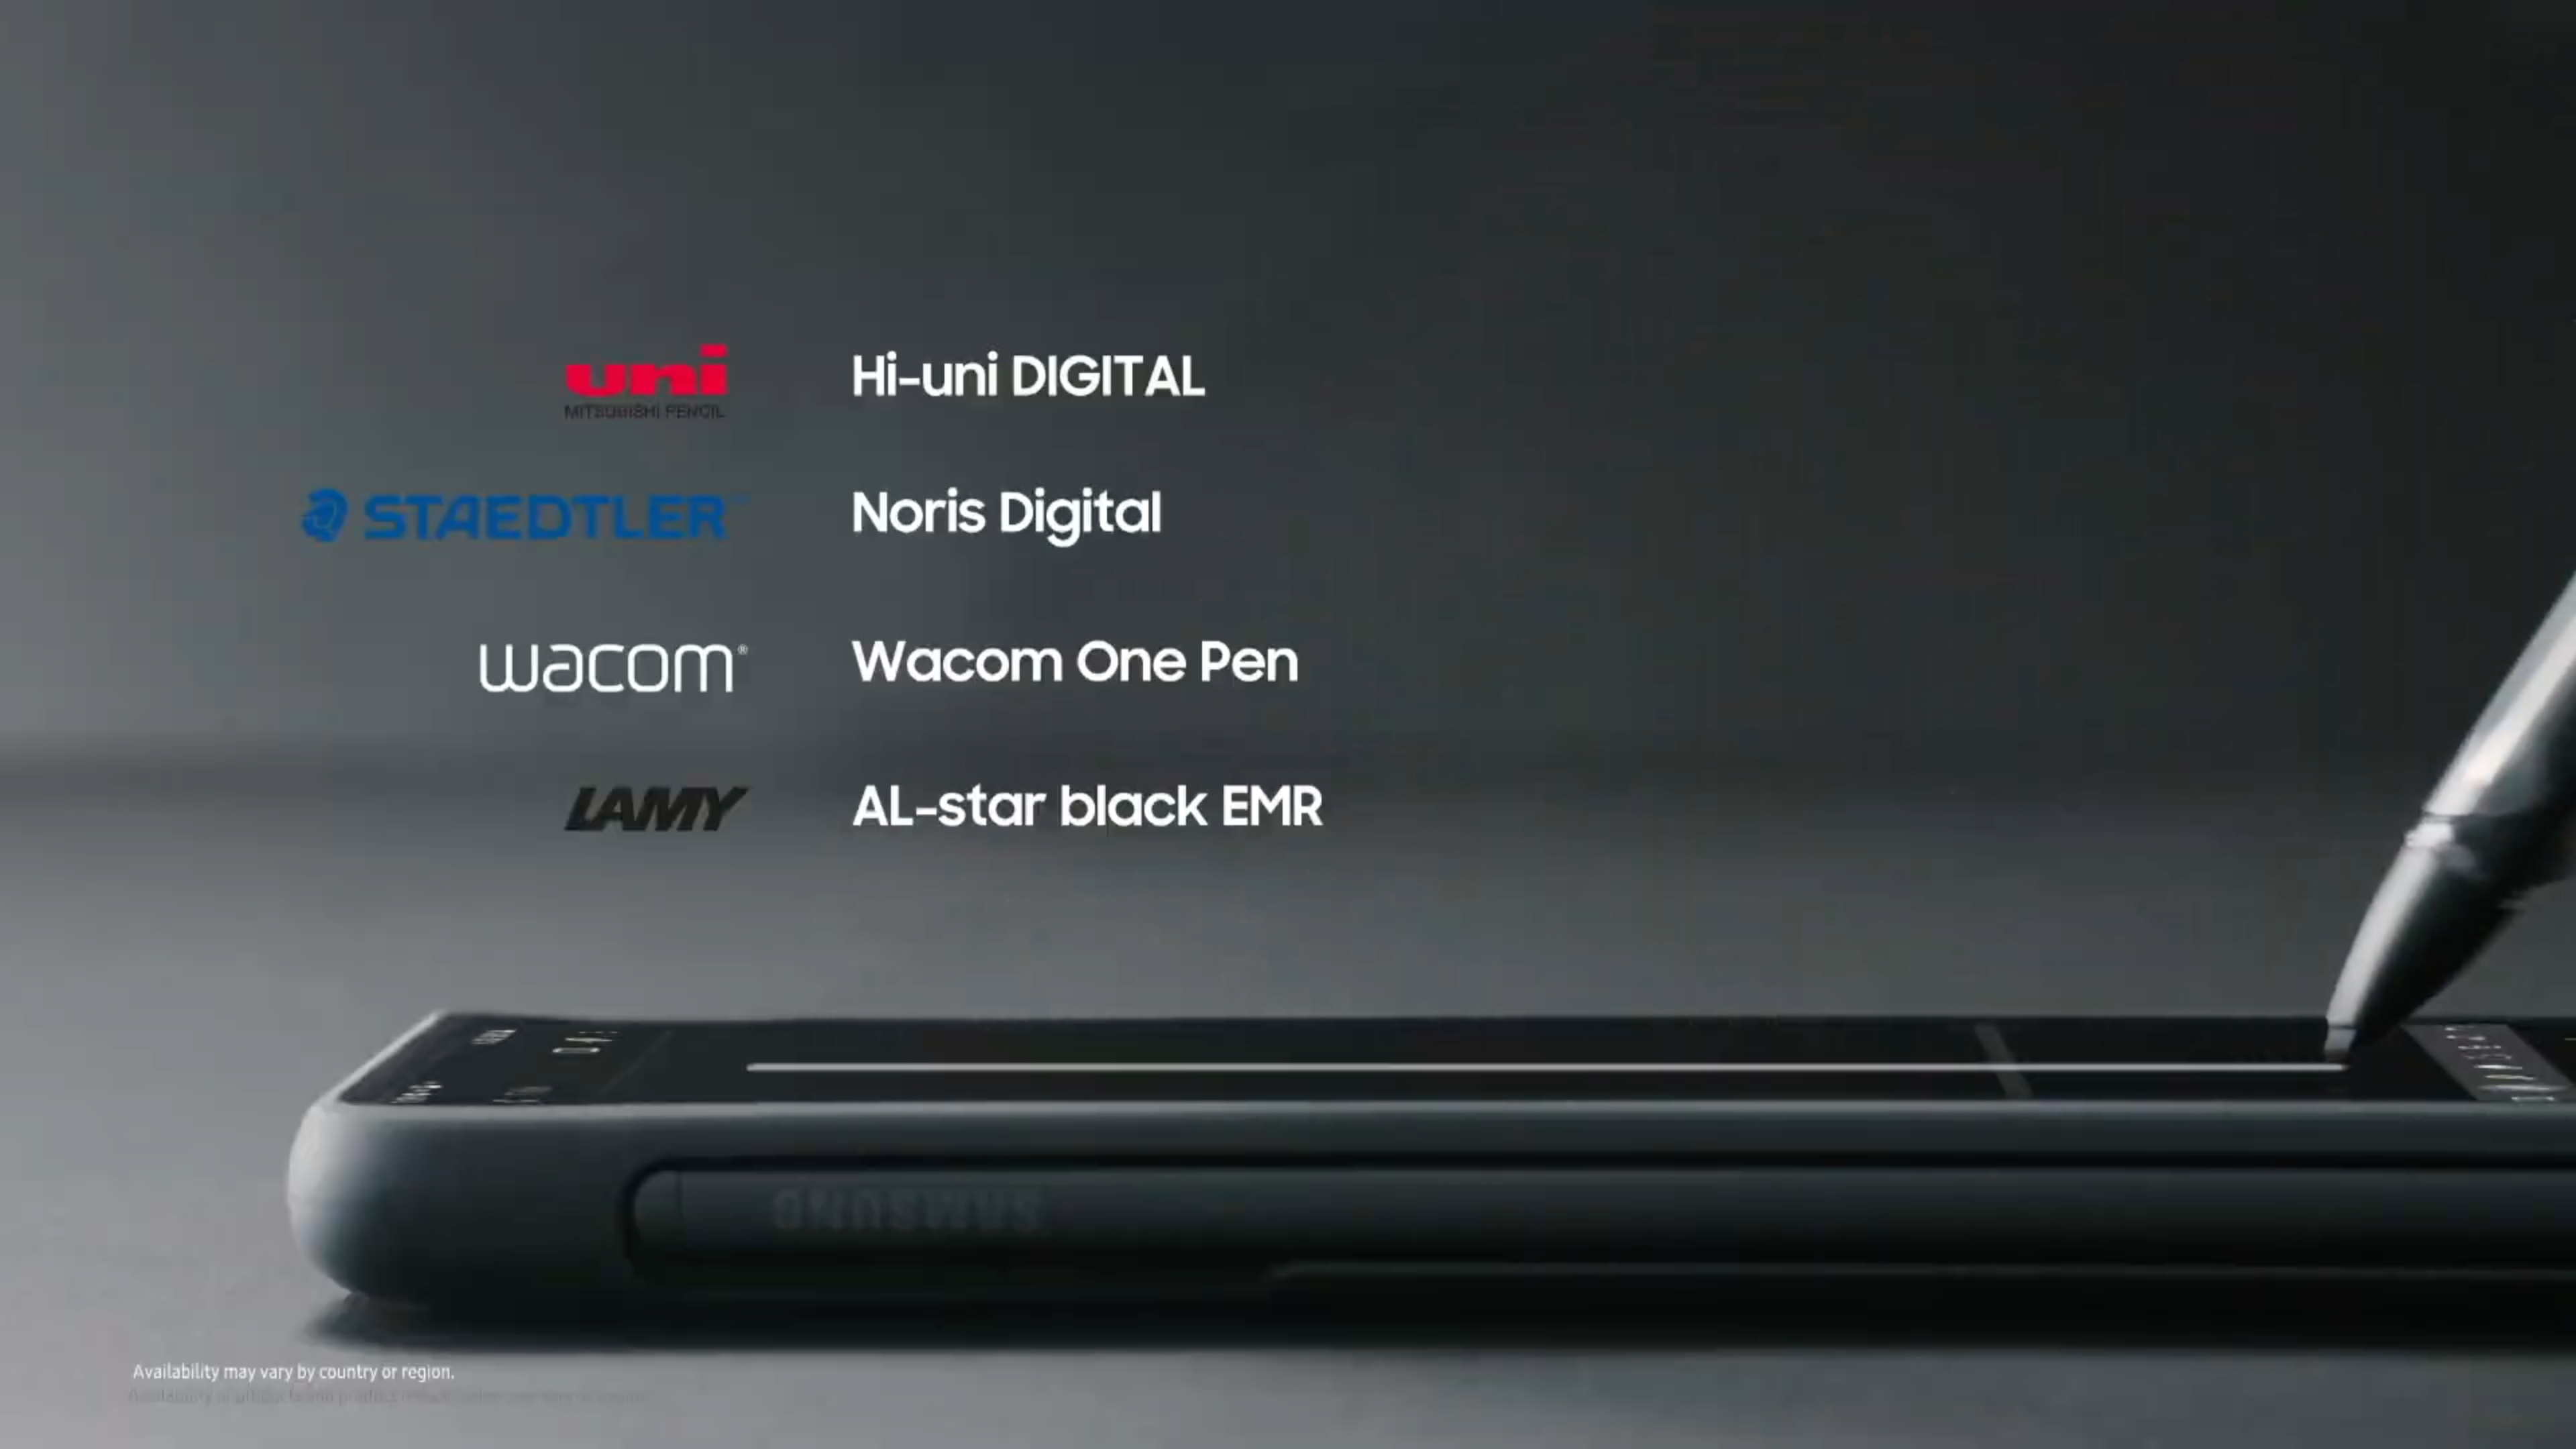 Samsung Opens S Pen Ecosystem To Third Parties Announces S Pen Pro Zdnet